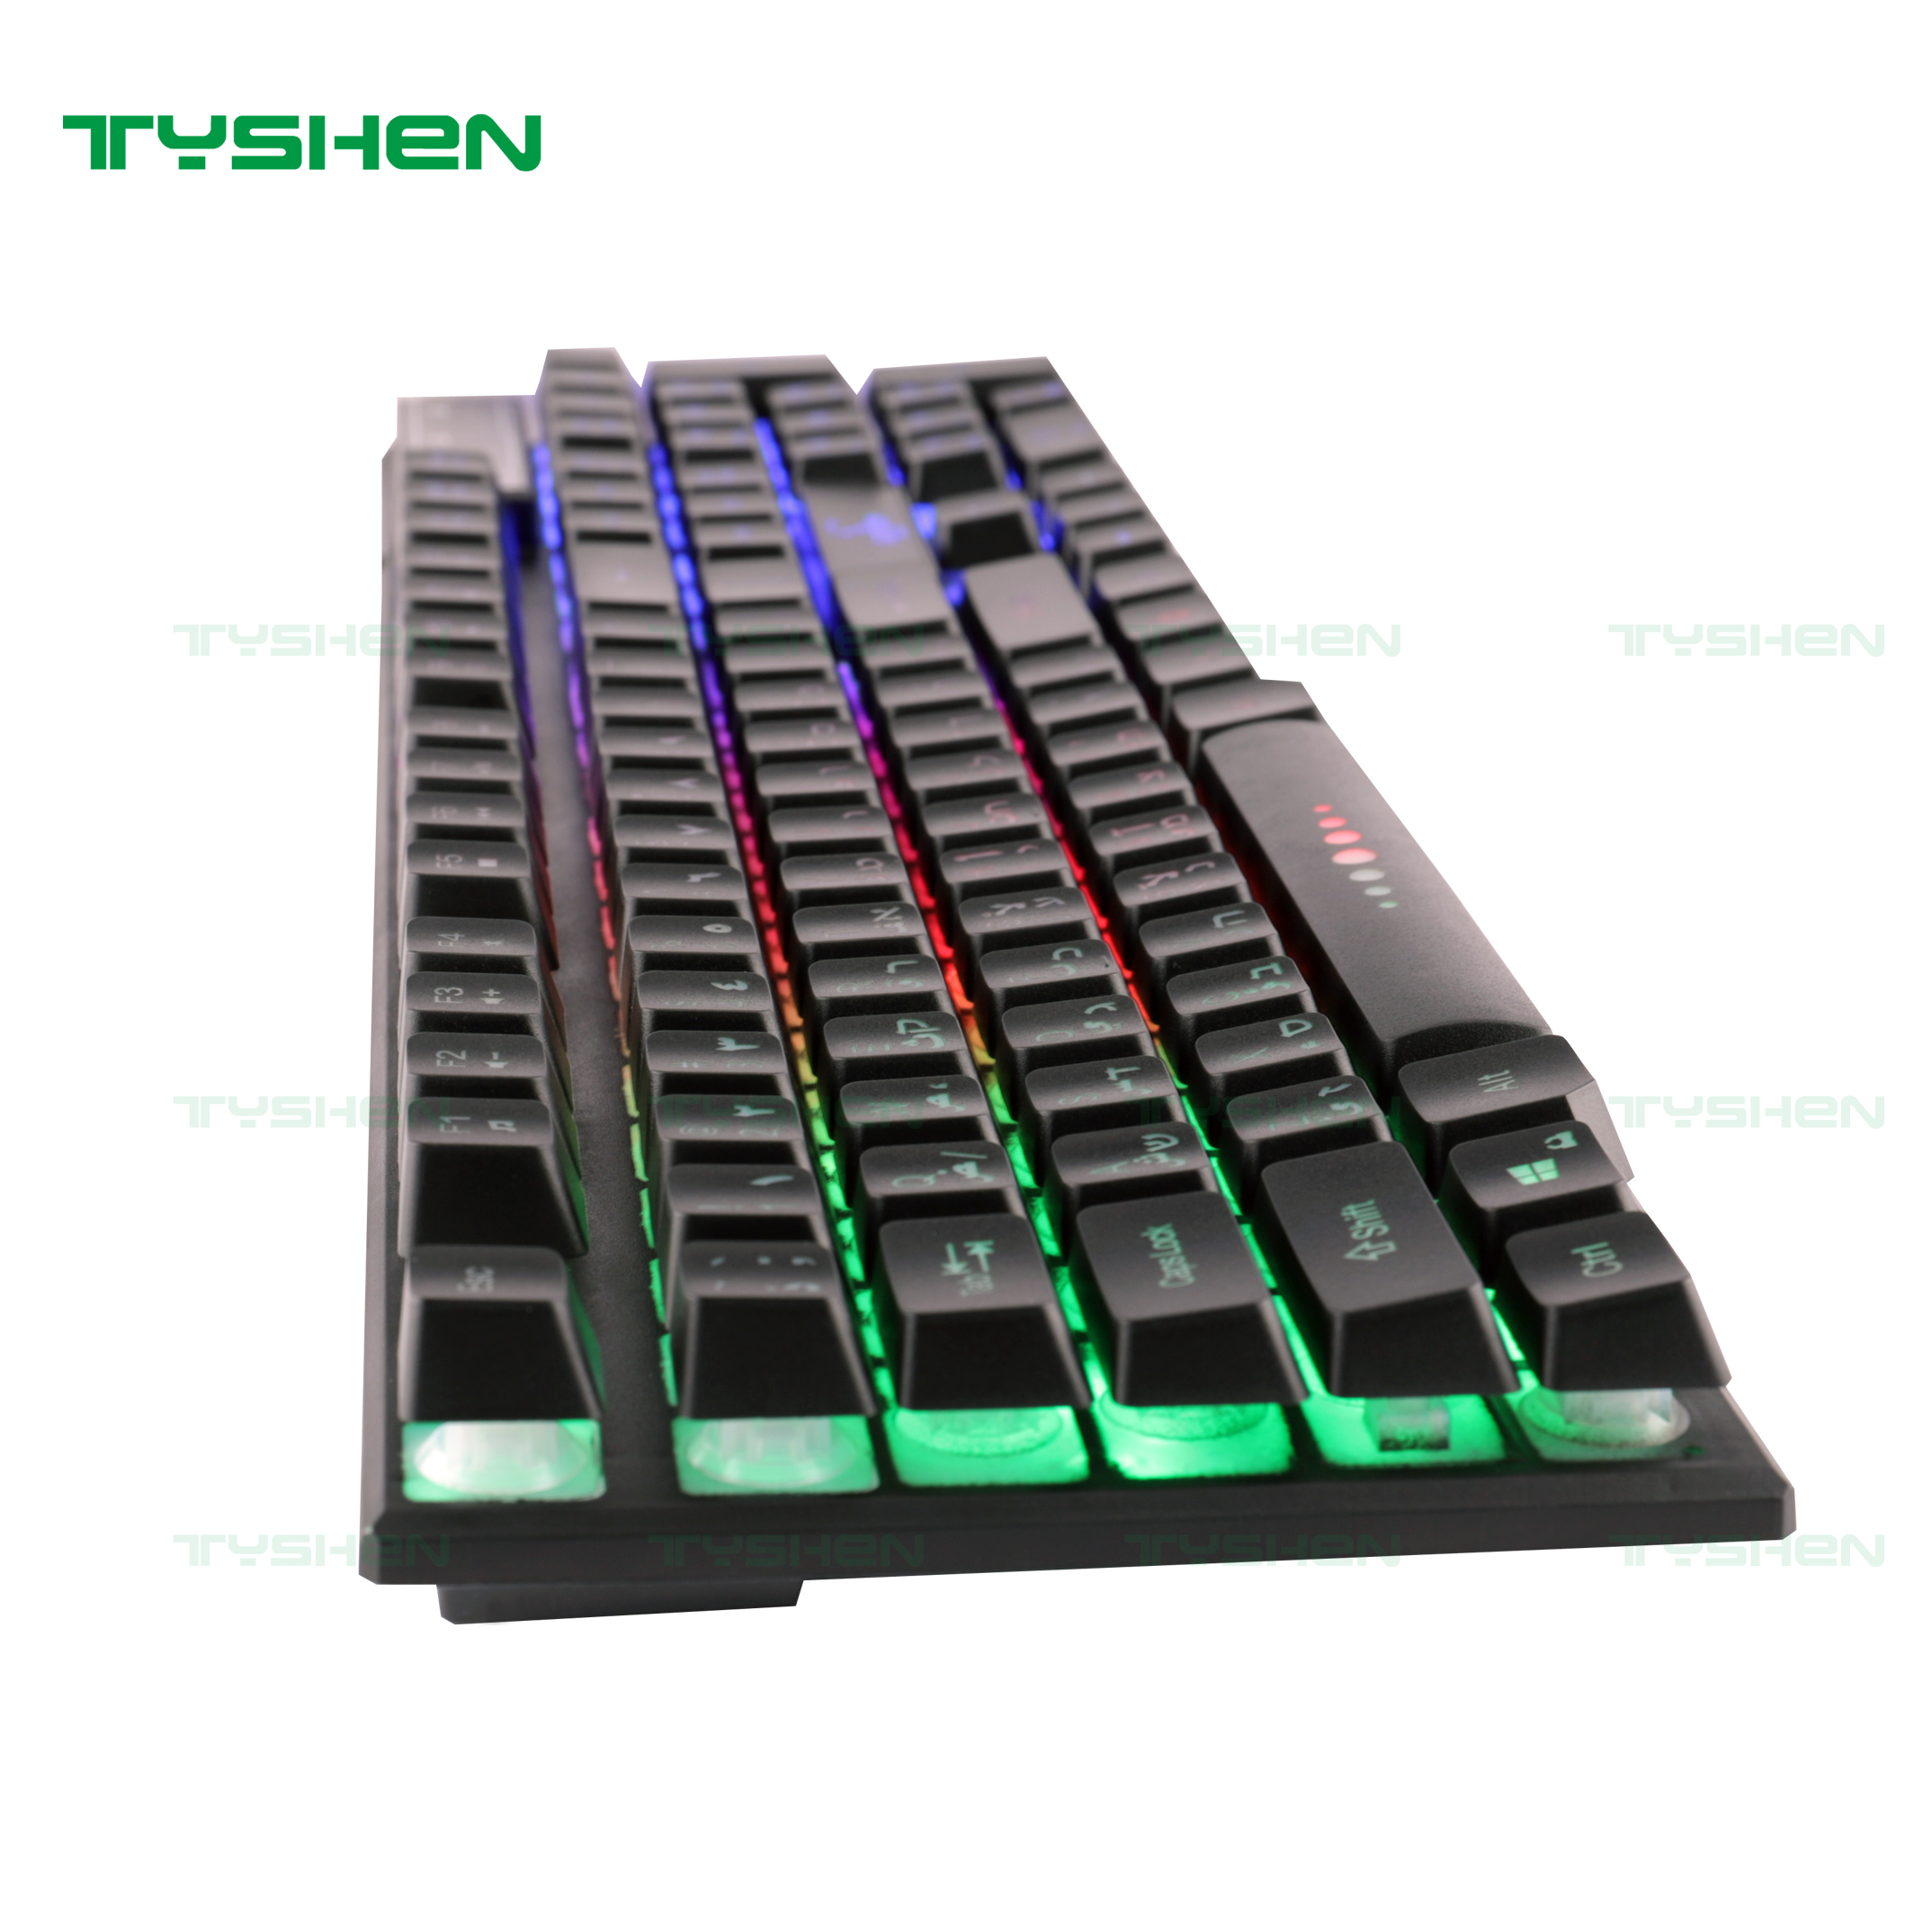 One Color Rainbow Gaming Keyboard,Lightness Adjustable,with Win Lock Key, and Full Lock Key